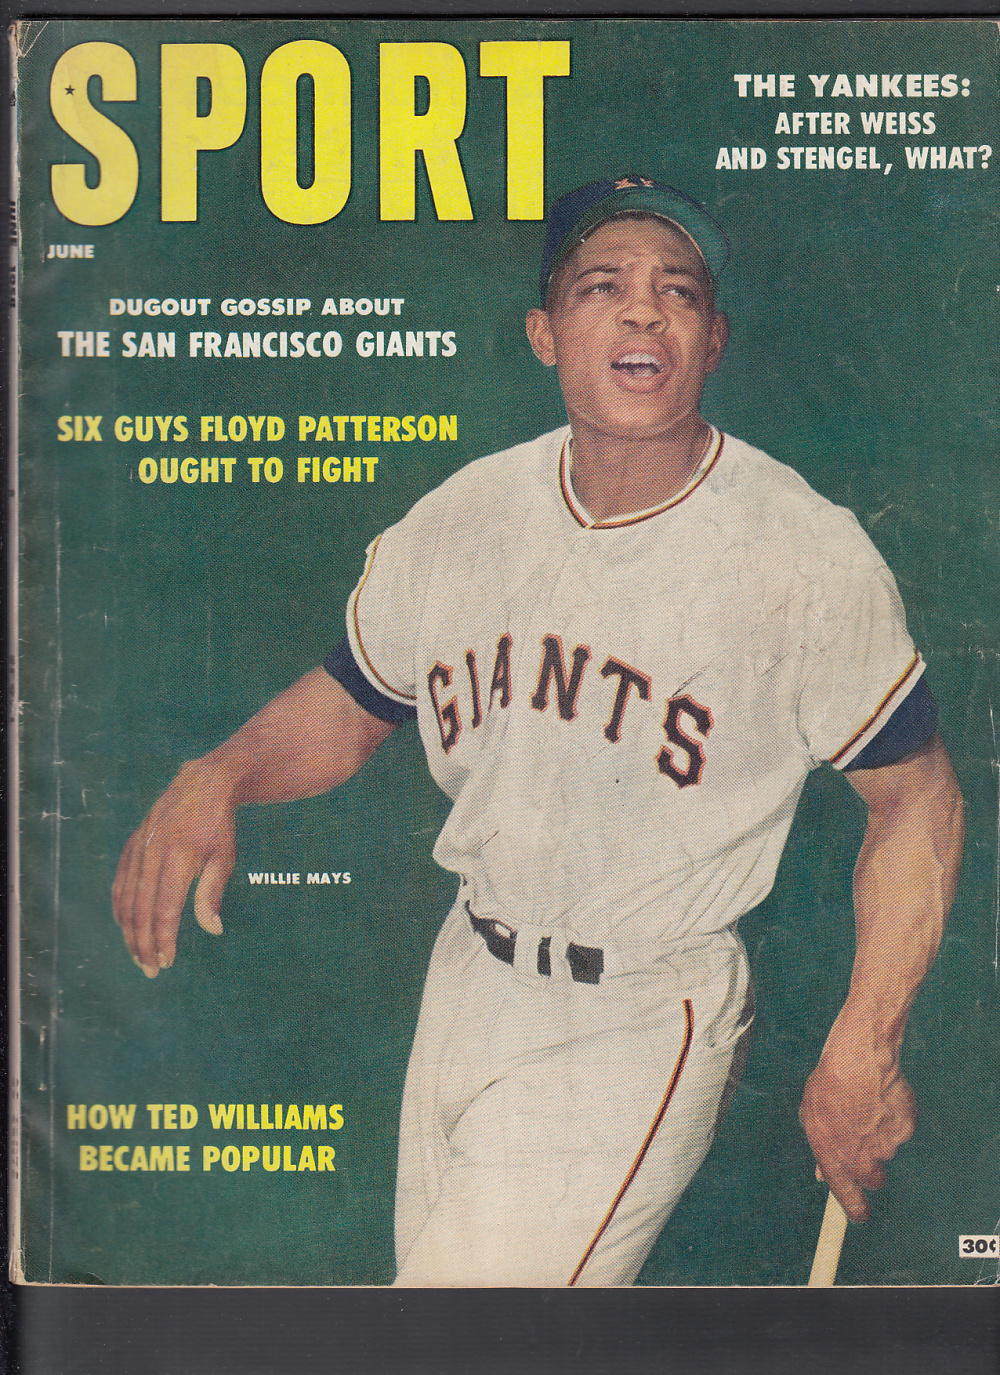 1958 SPORT FULL MAGAZINE W. WAYS ON COVER photo